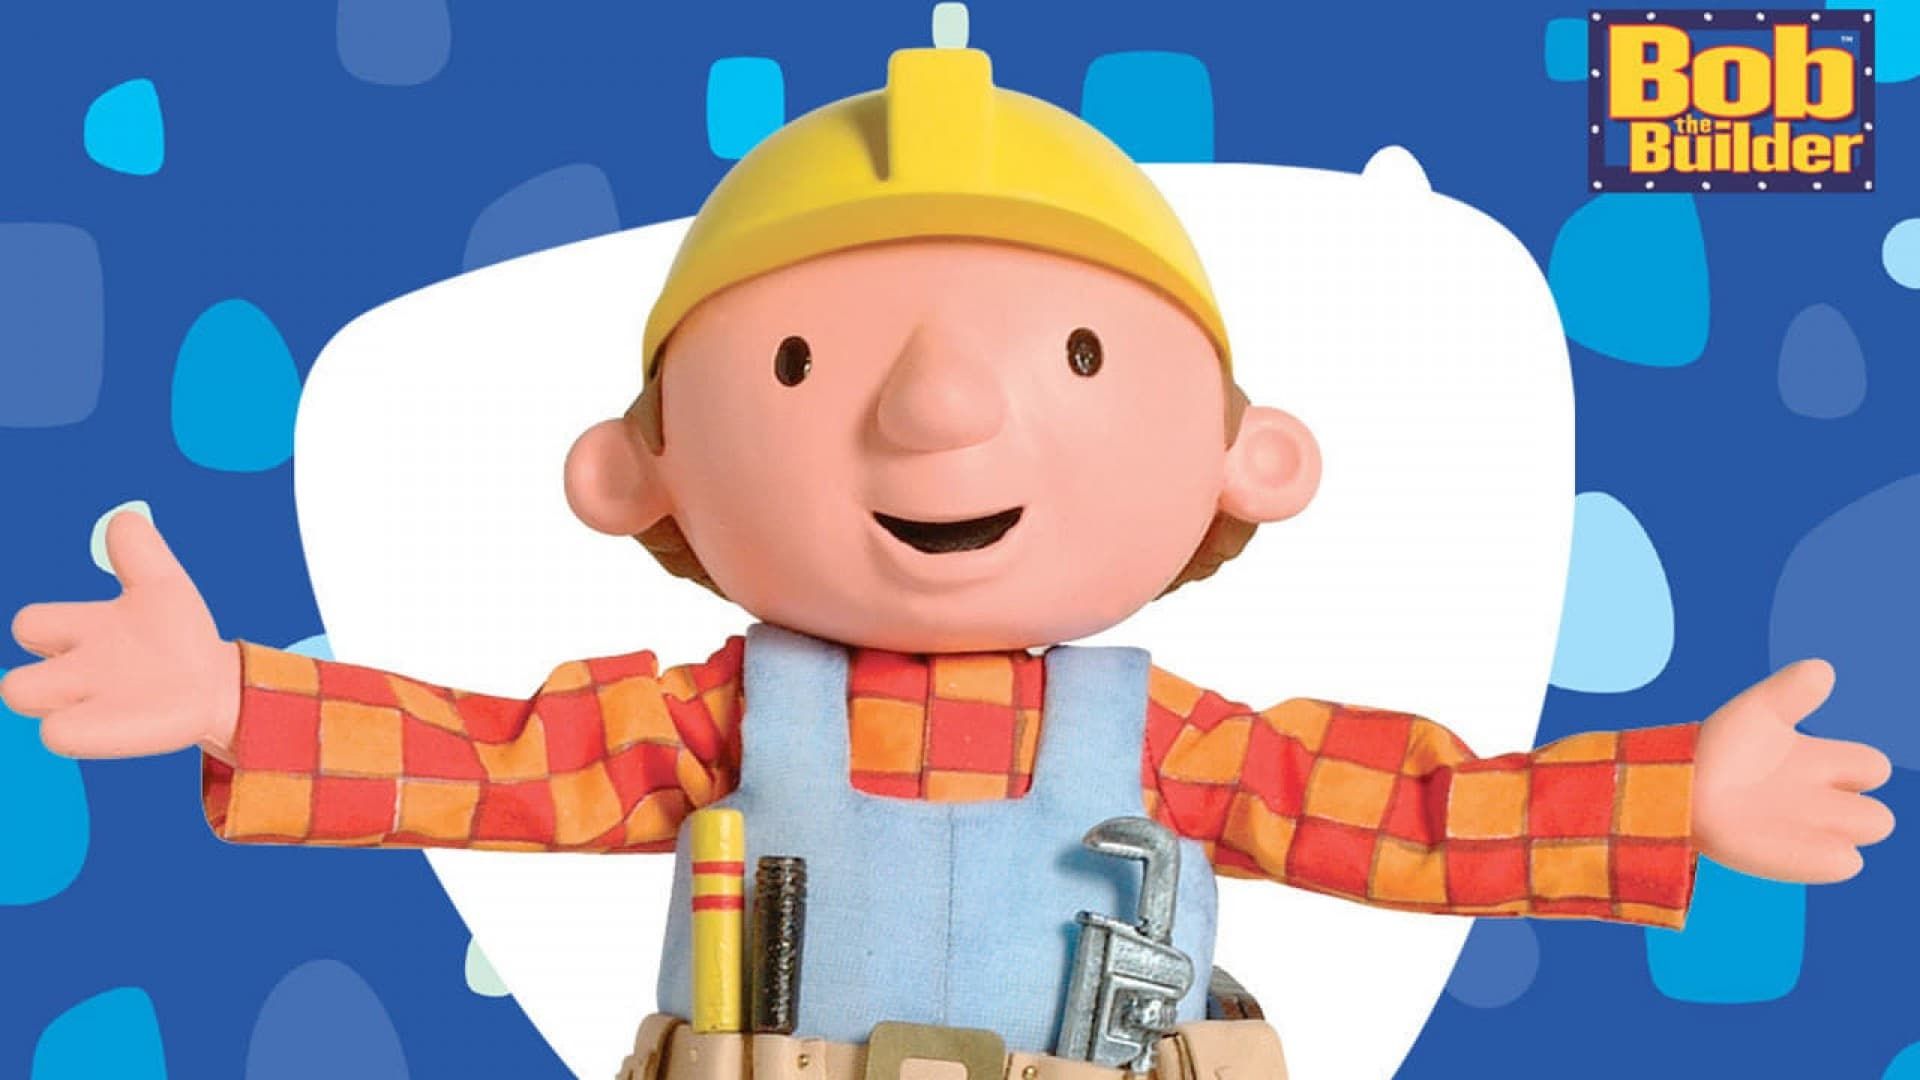 Bob the Builder: The Legend of the Golden Hammer background